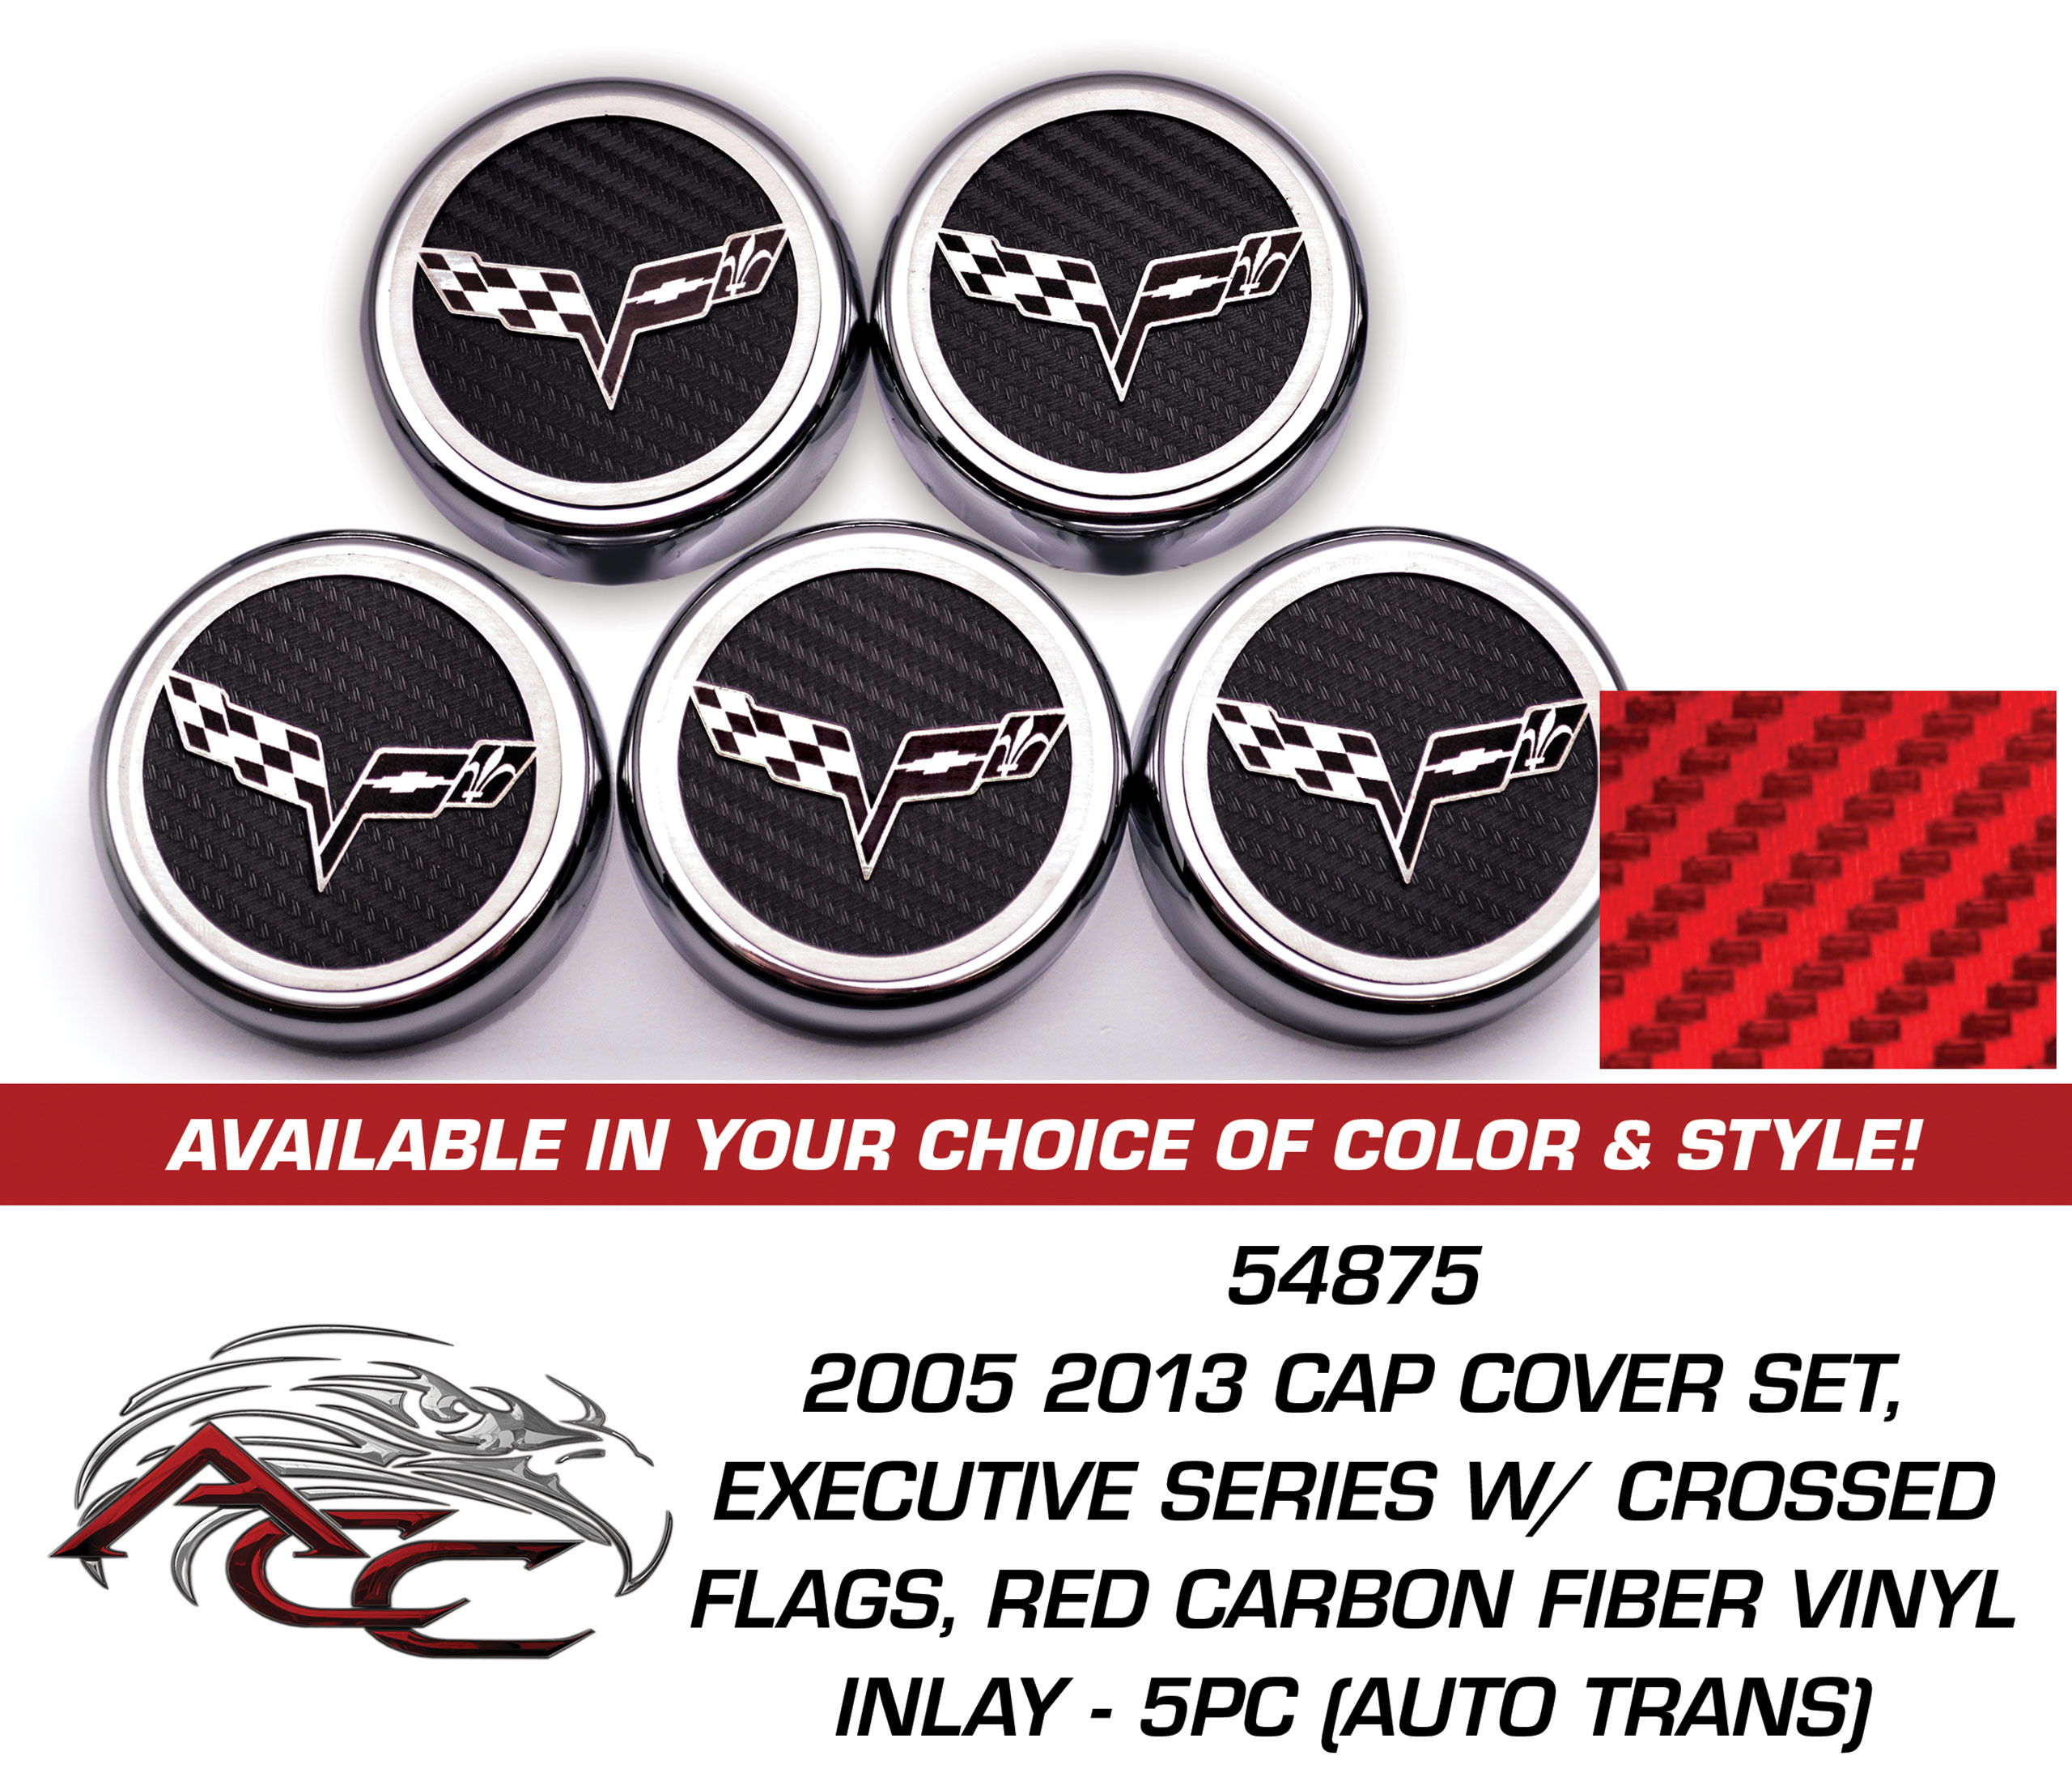 American Car Craft 2005-2013 Chevrolet Corvette Cap Cover Set, Executive Series W/Crossed Flags,5pc (Auto Trans)